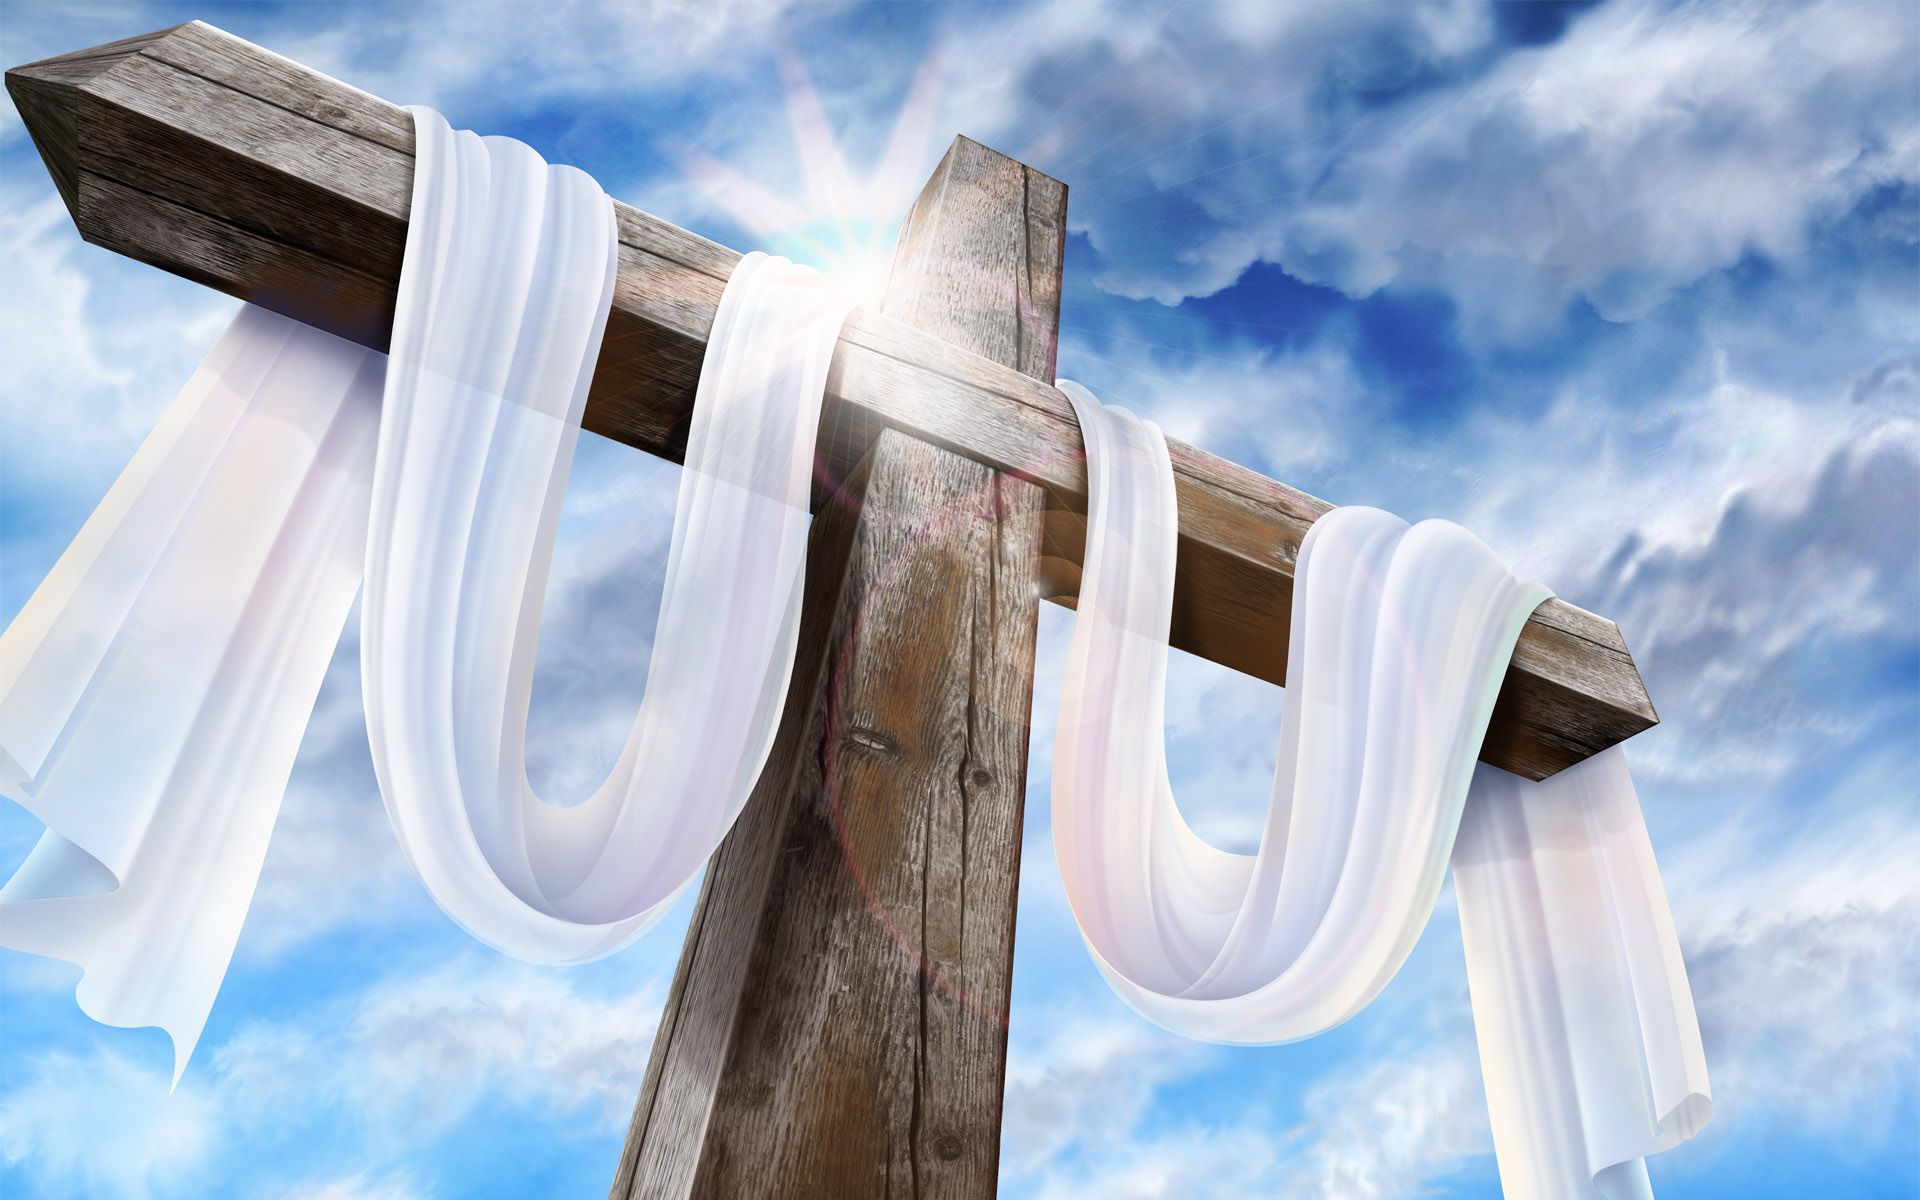 ☃ HOLIDAYS: Easter/ Jesus Is Risen!